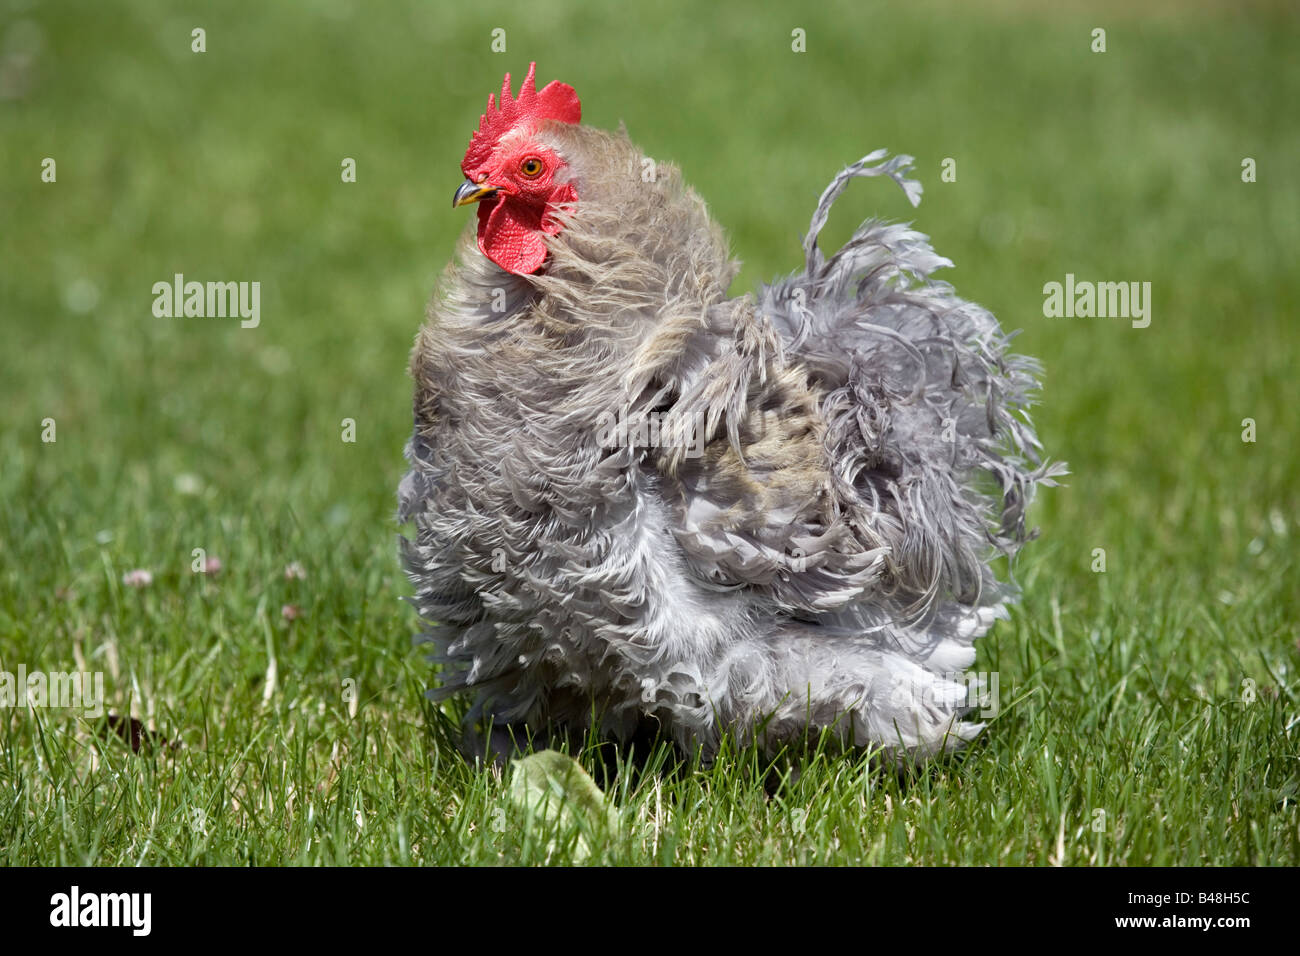 grey chicken free range Stock Photo